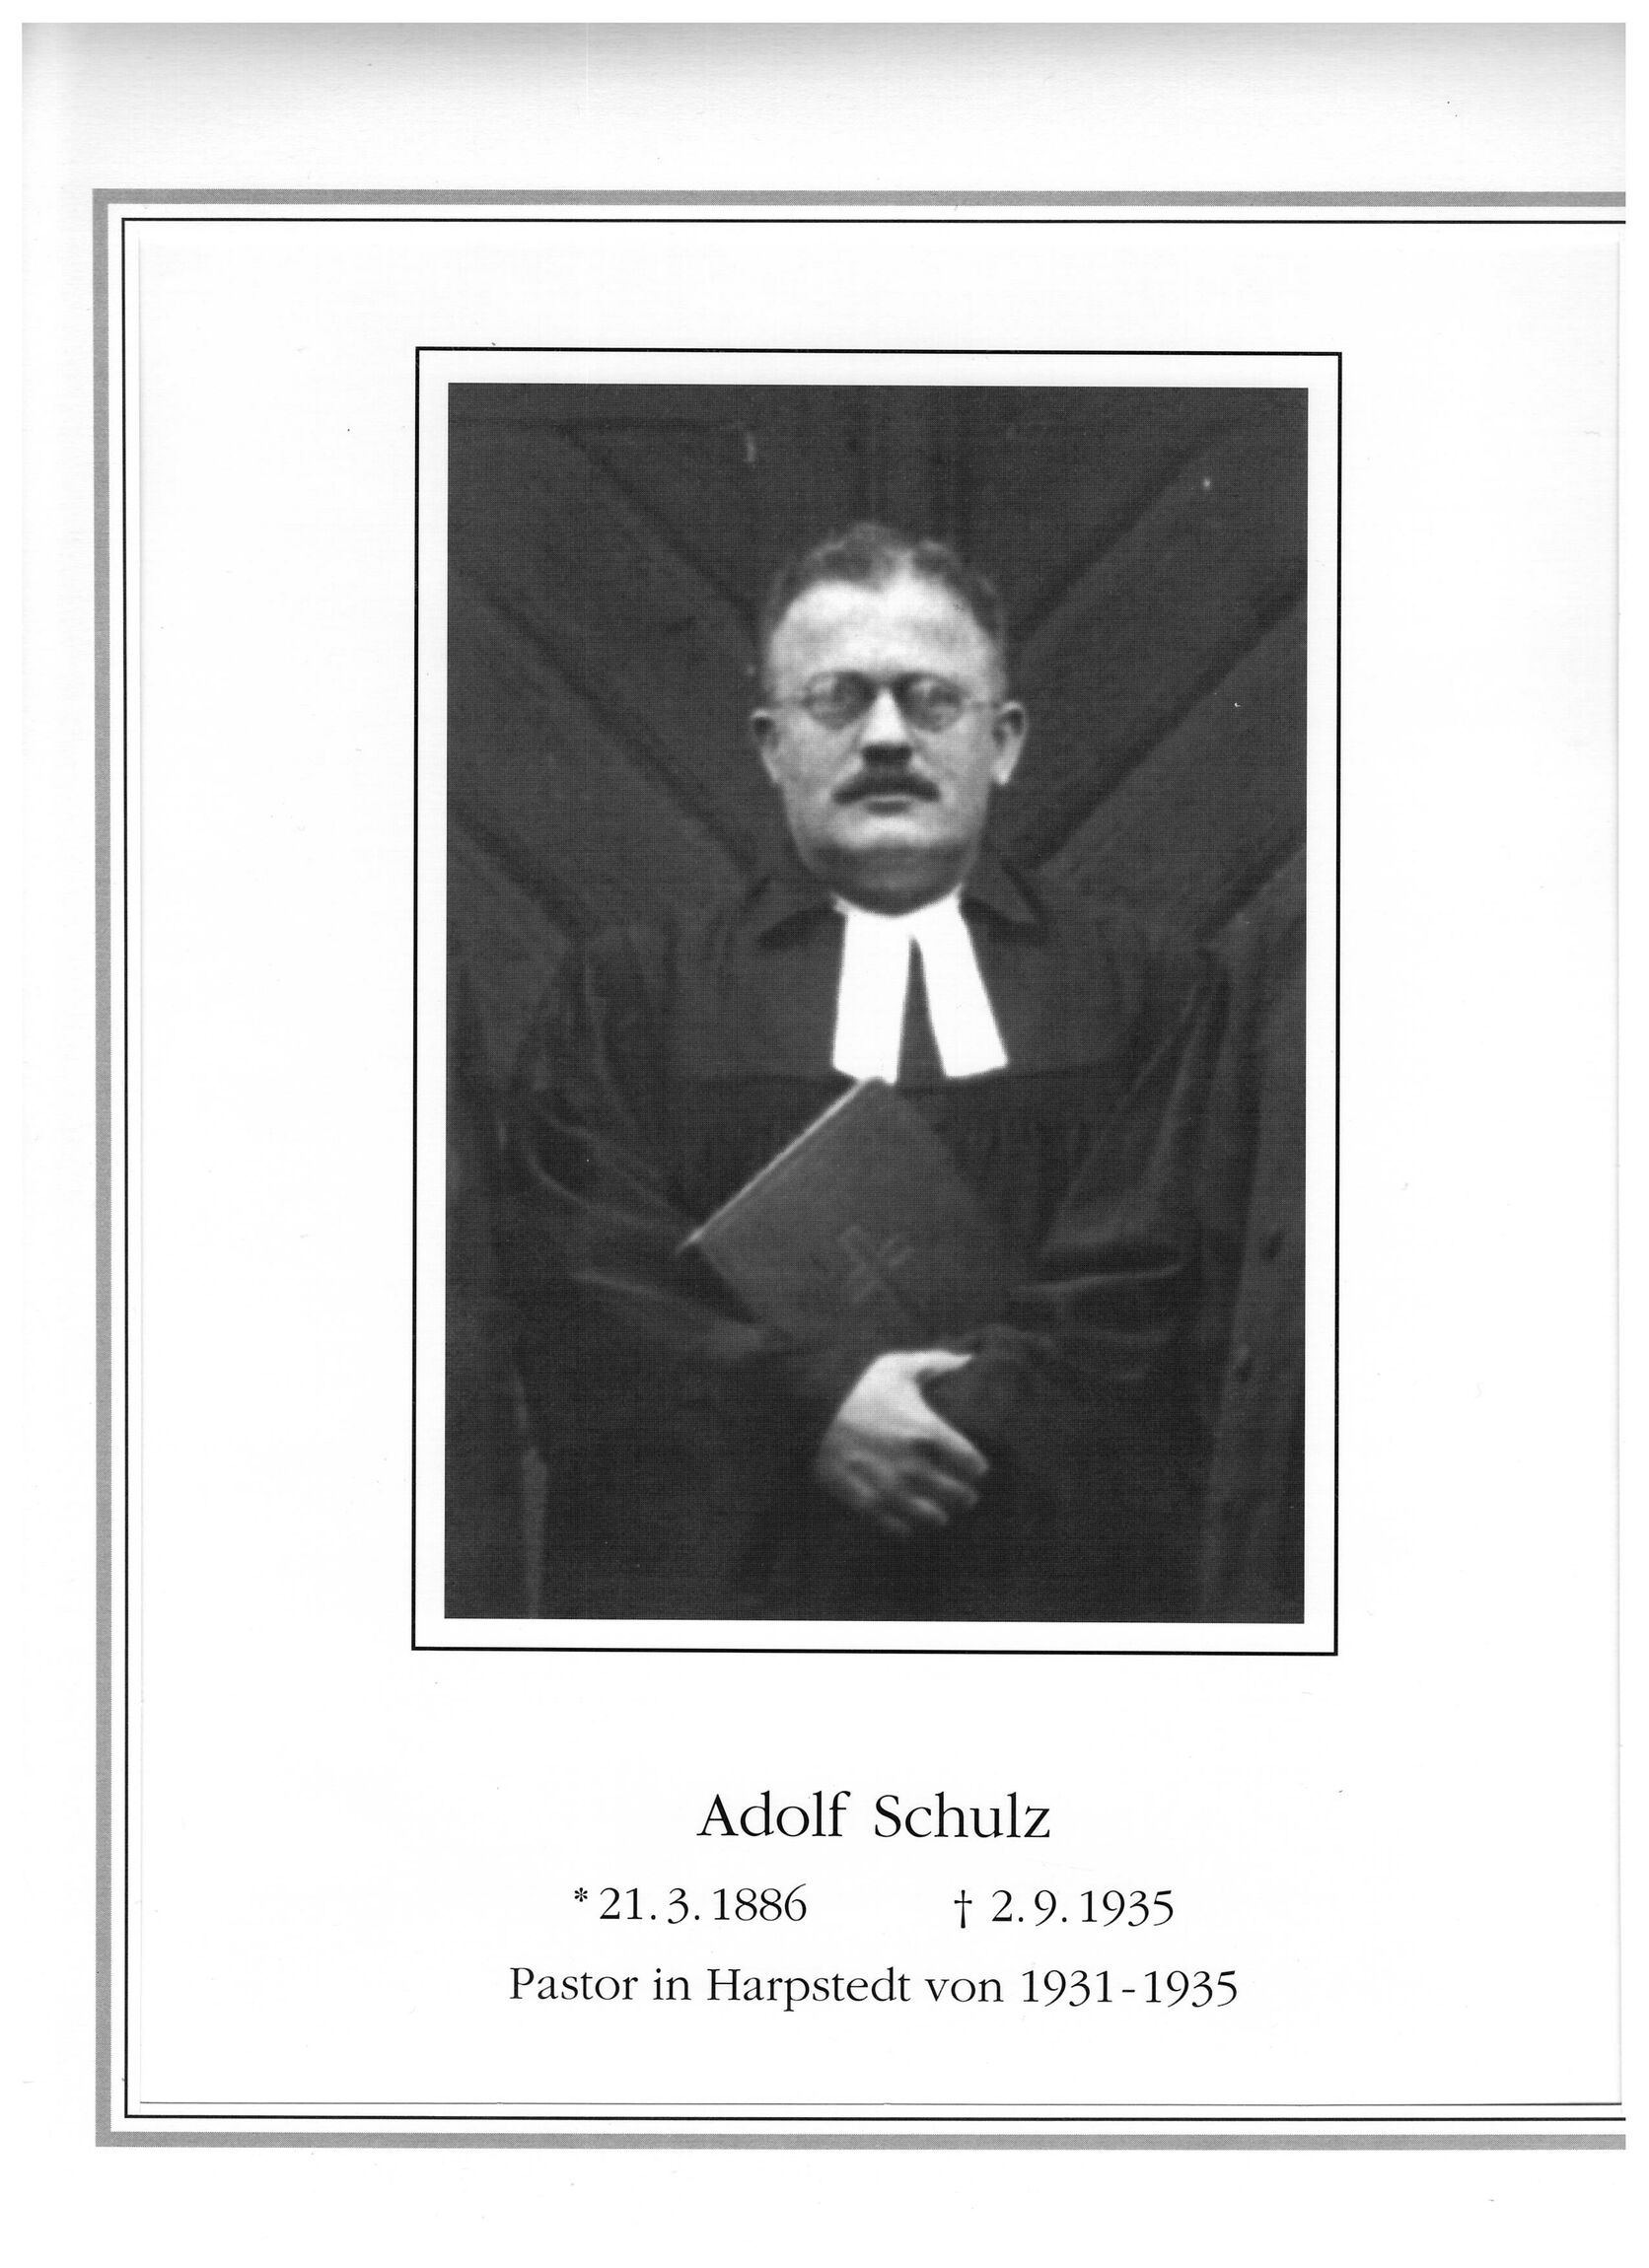 Schulz, Adolf Pastor